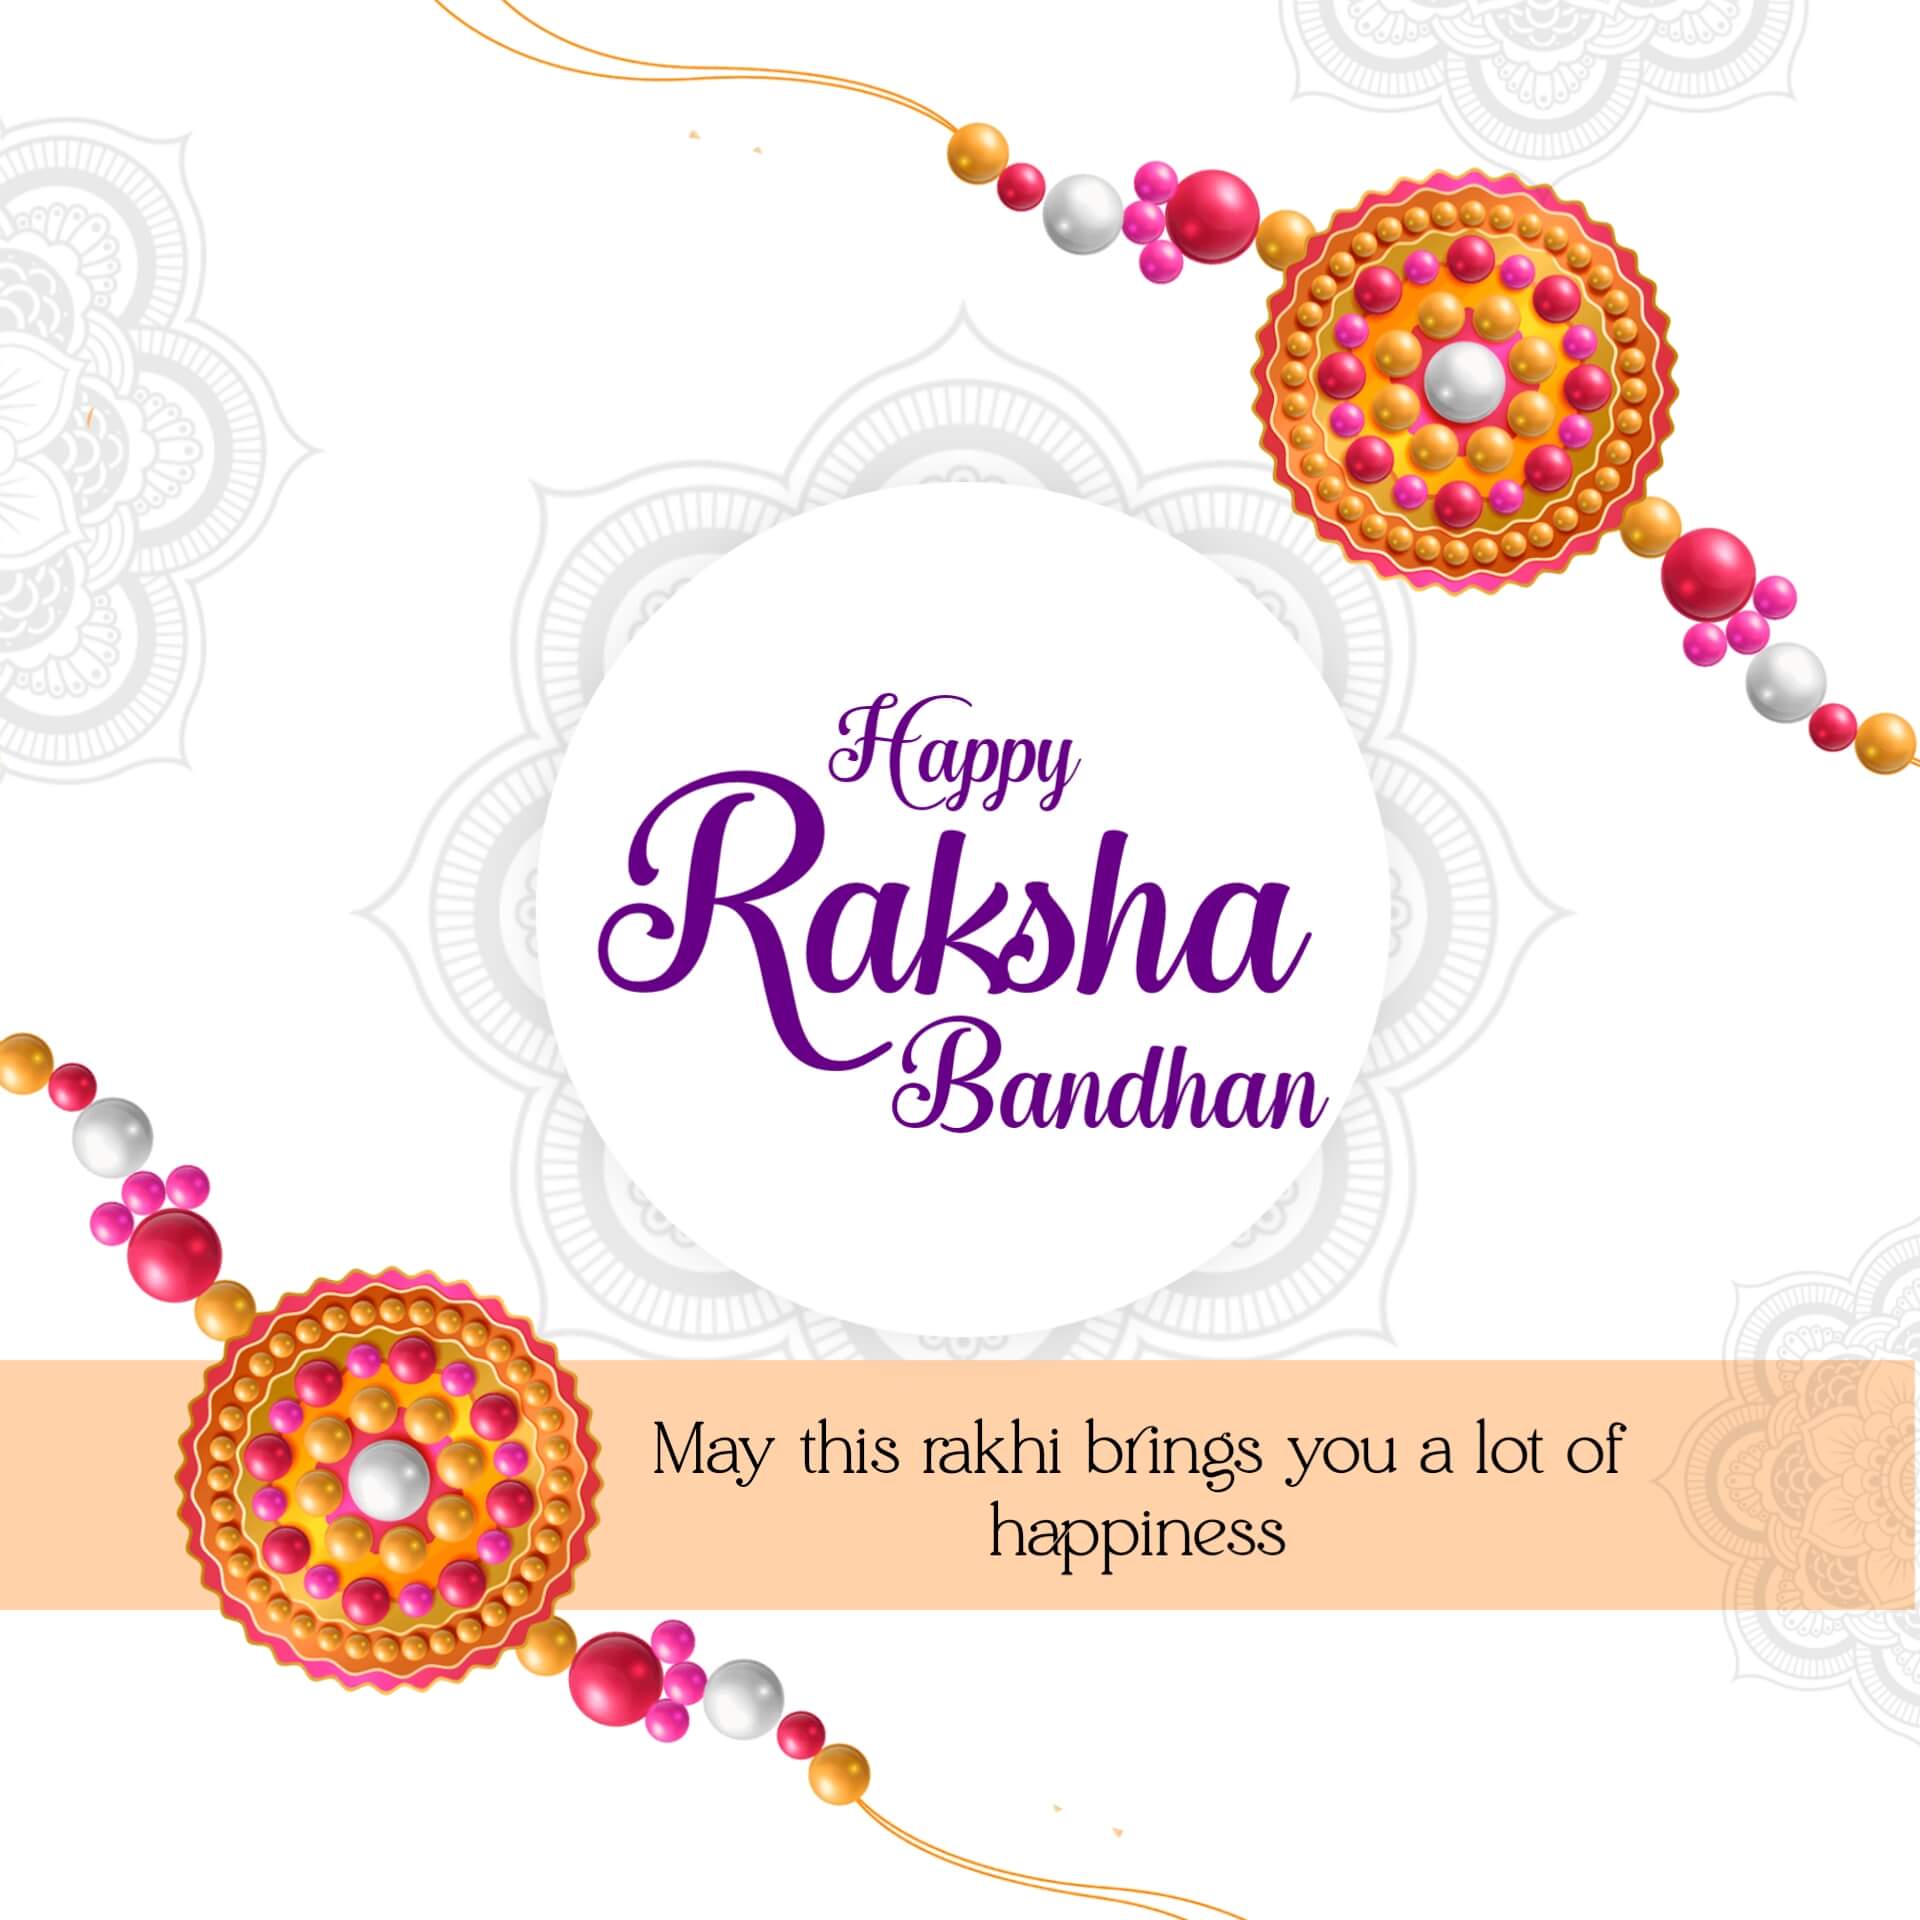 Beautiful Happy Raksha Bandhan Image